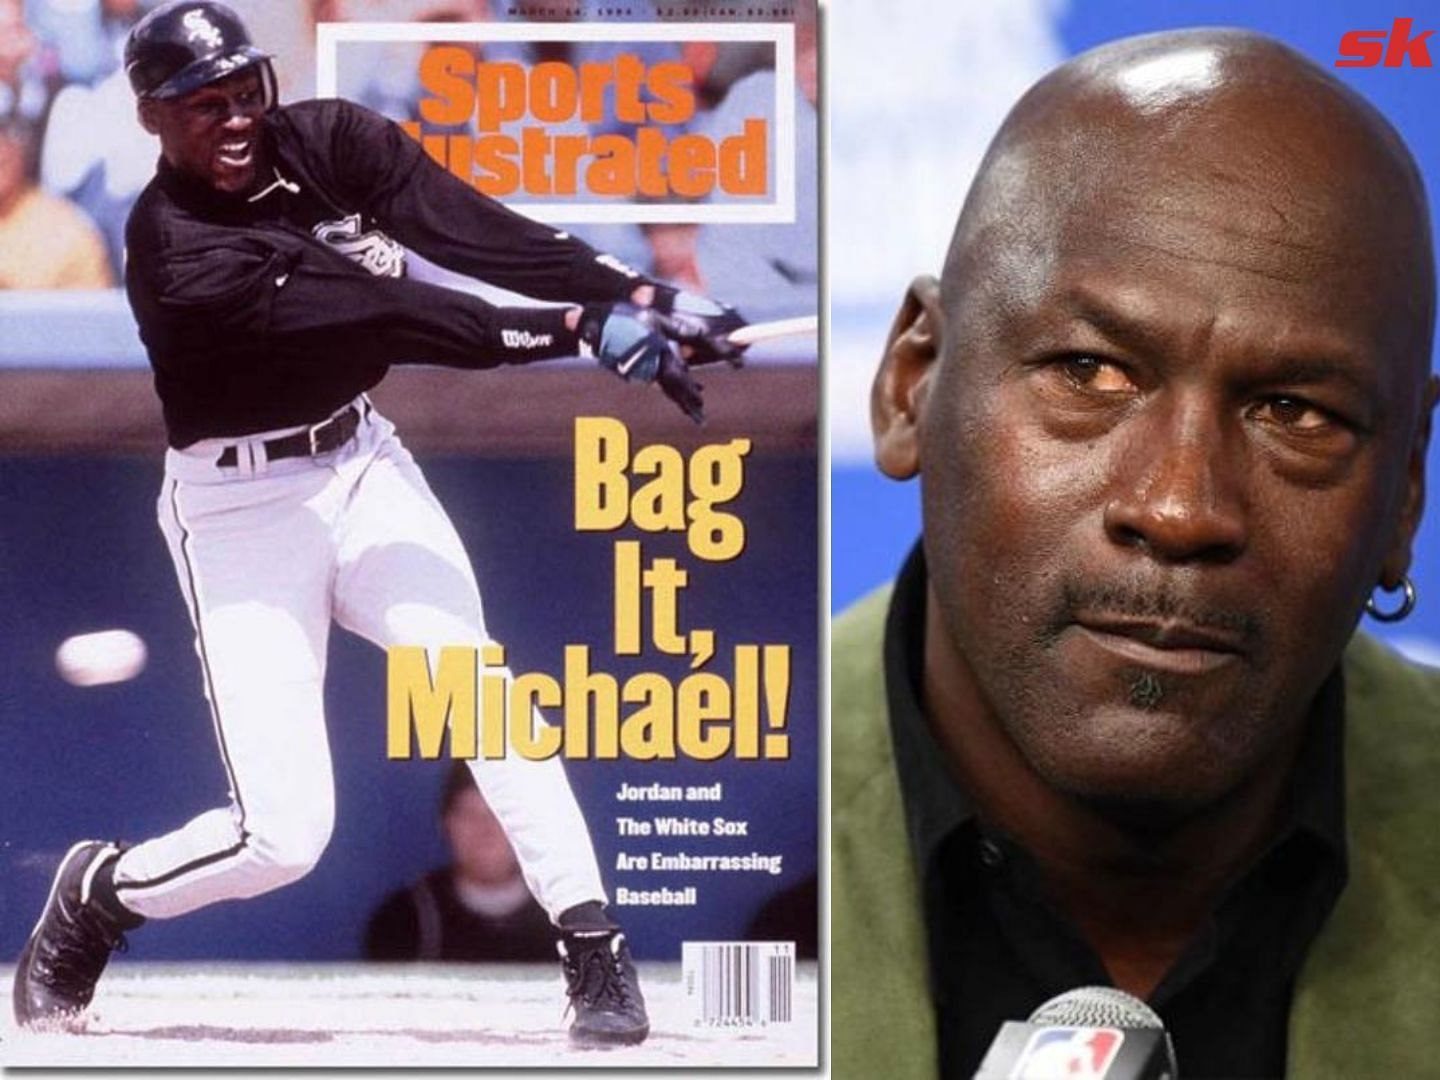 Michael Jordan was unimpressed with Sports Illustrated mocking his baseball team